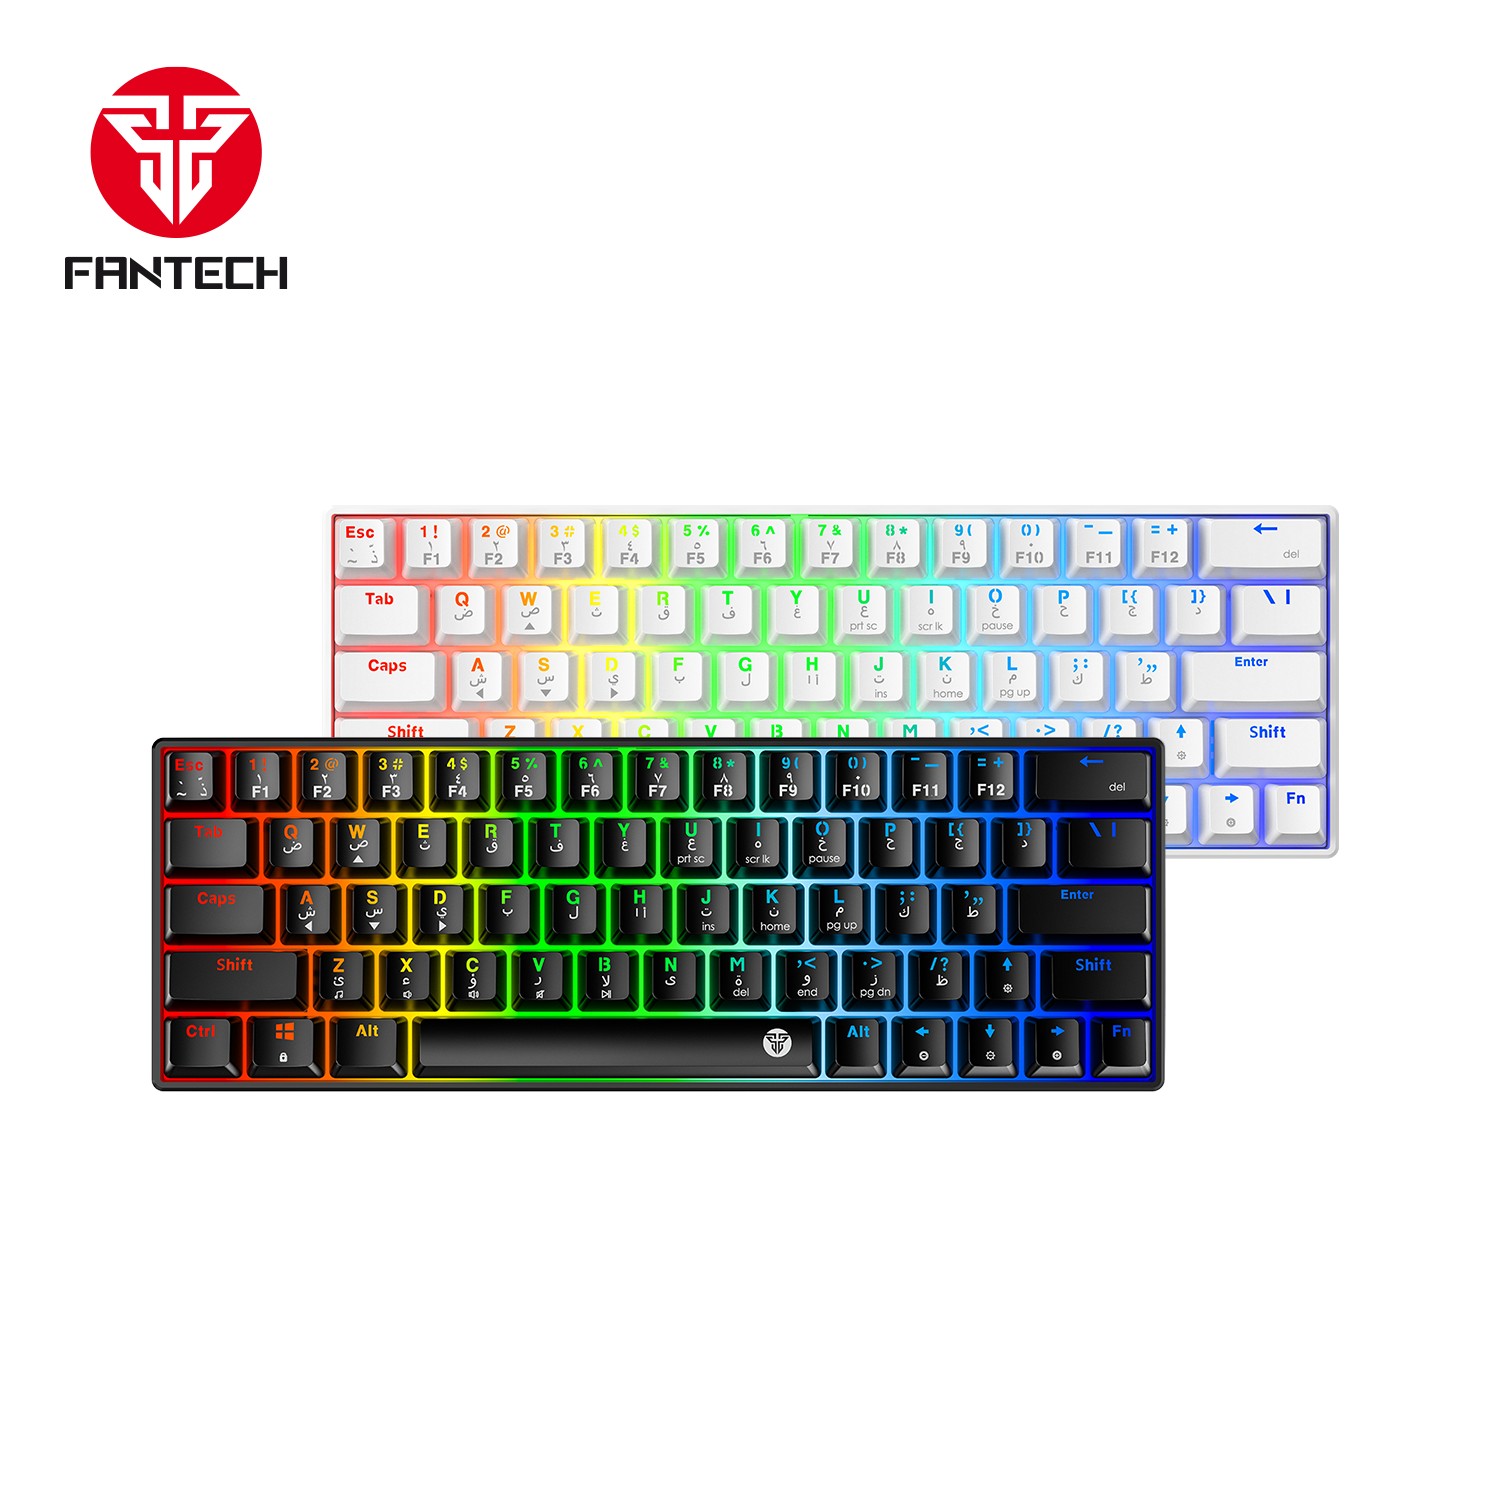 Fantech Atom63 MK859 Mechanical Gaming Keyboard Arabic/English JOD 20